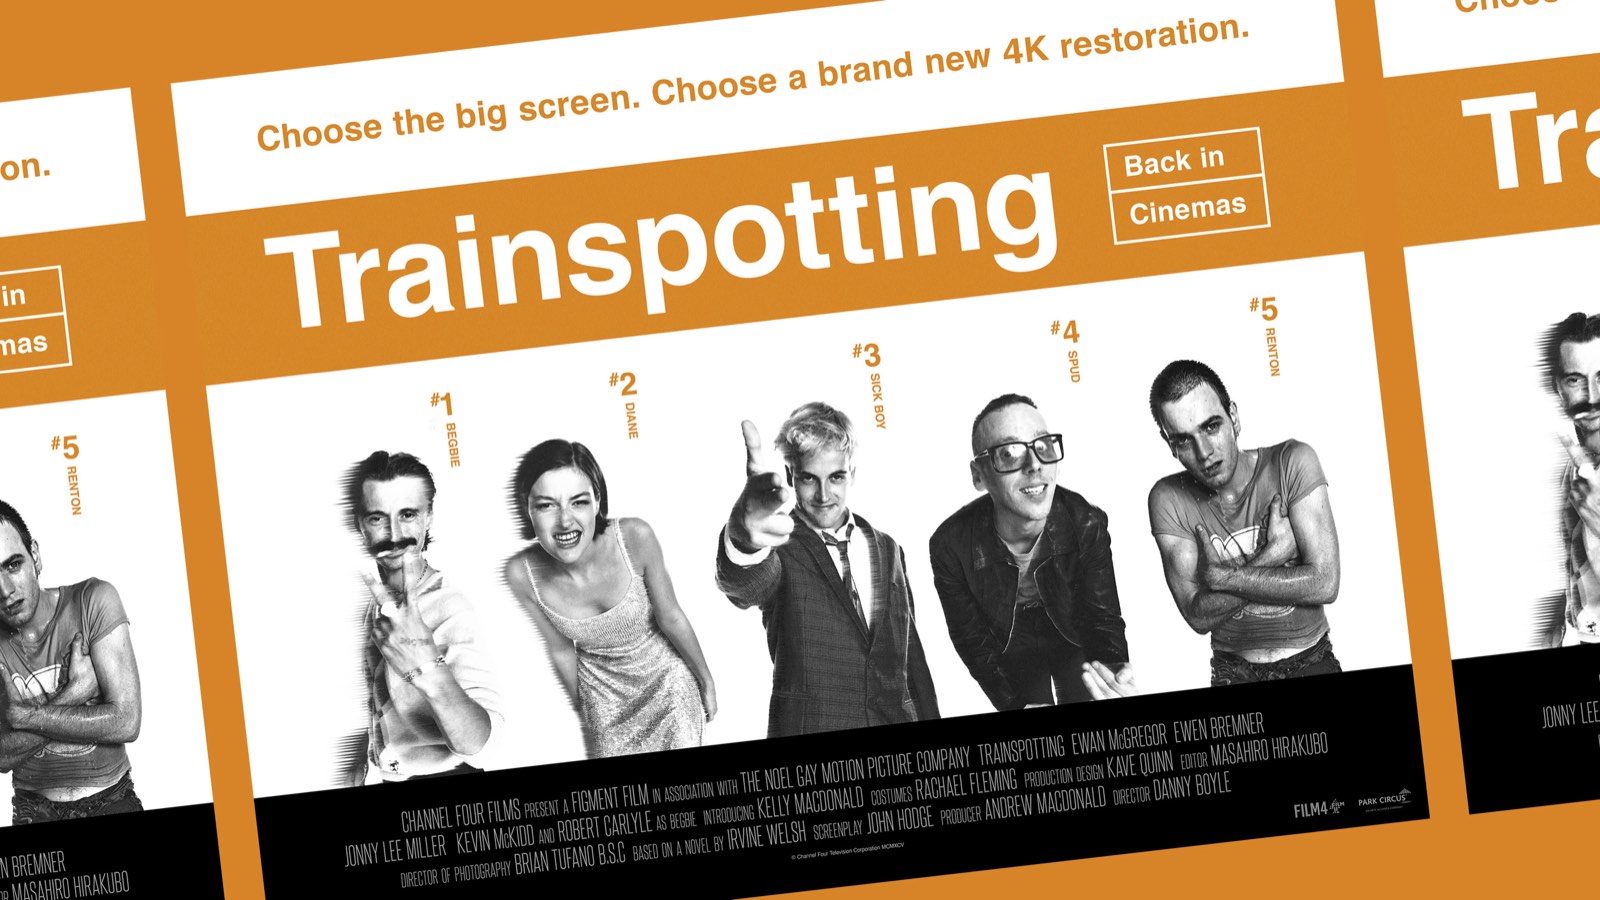 Choose a brand new 4K restoration of Trainspotting, back in cinemas